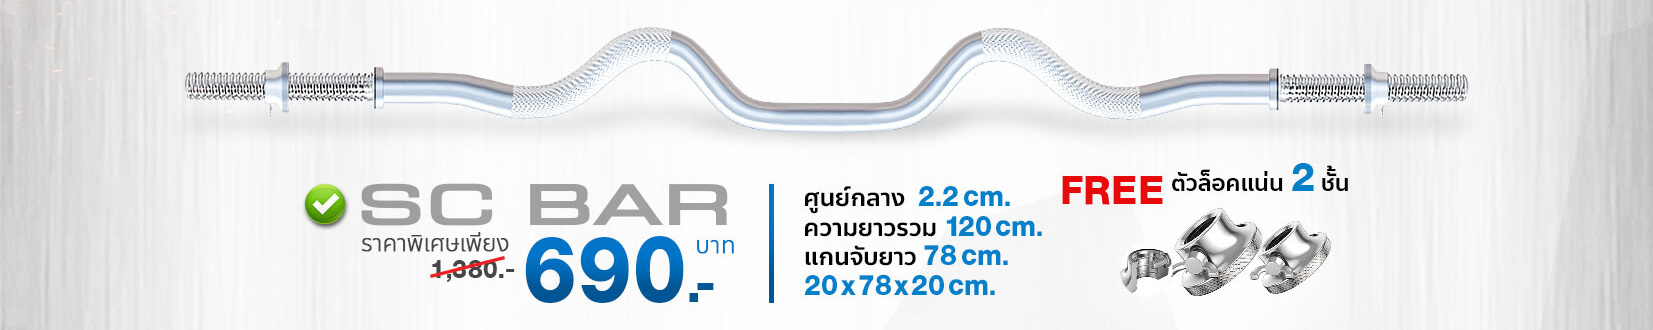 Sc bar ยาว 120 cm